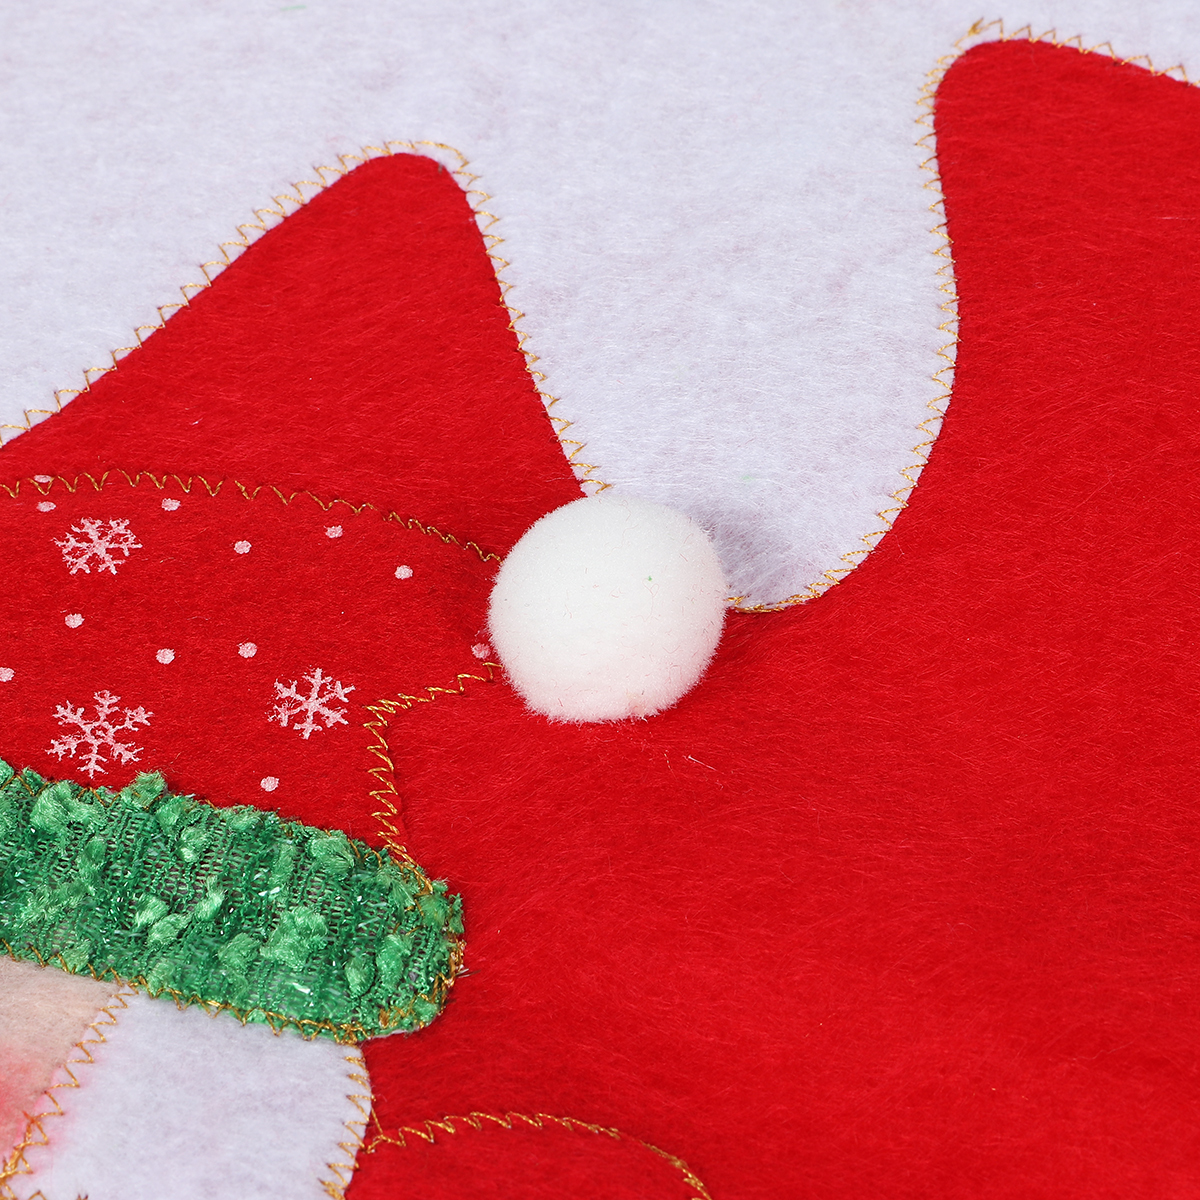 2020-Christmas-Decor-Santa-Claus-Christmas-Tree-Skirt-Aprons-New-Year-Xmas-Tree-Carpet-Foot-Cover-fo-1770951-7